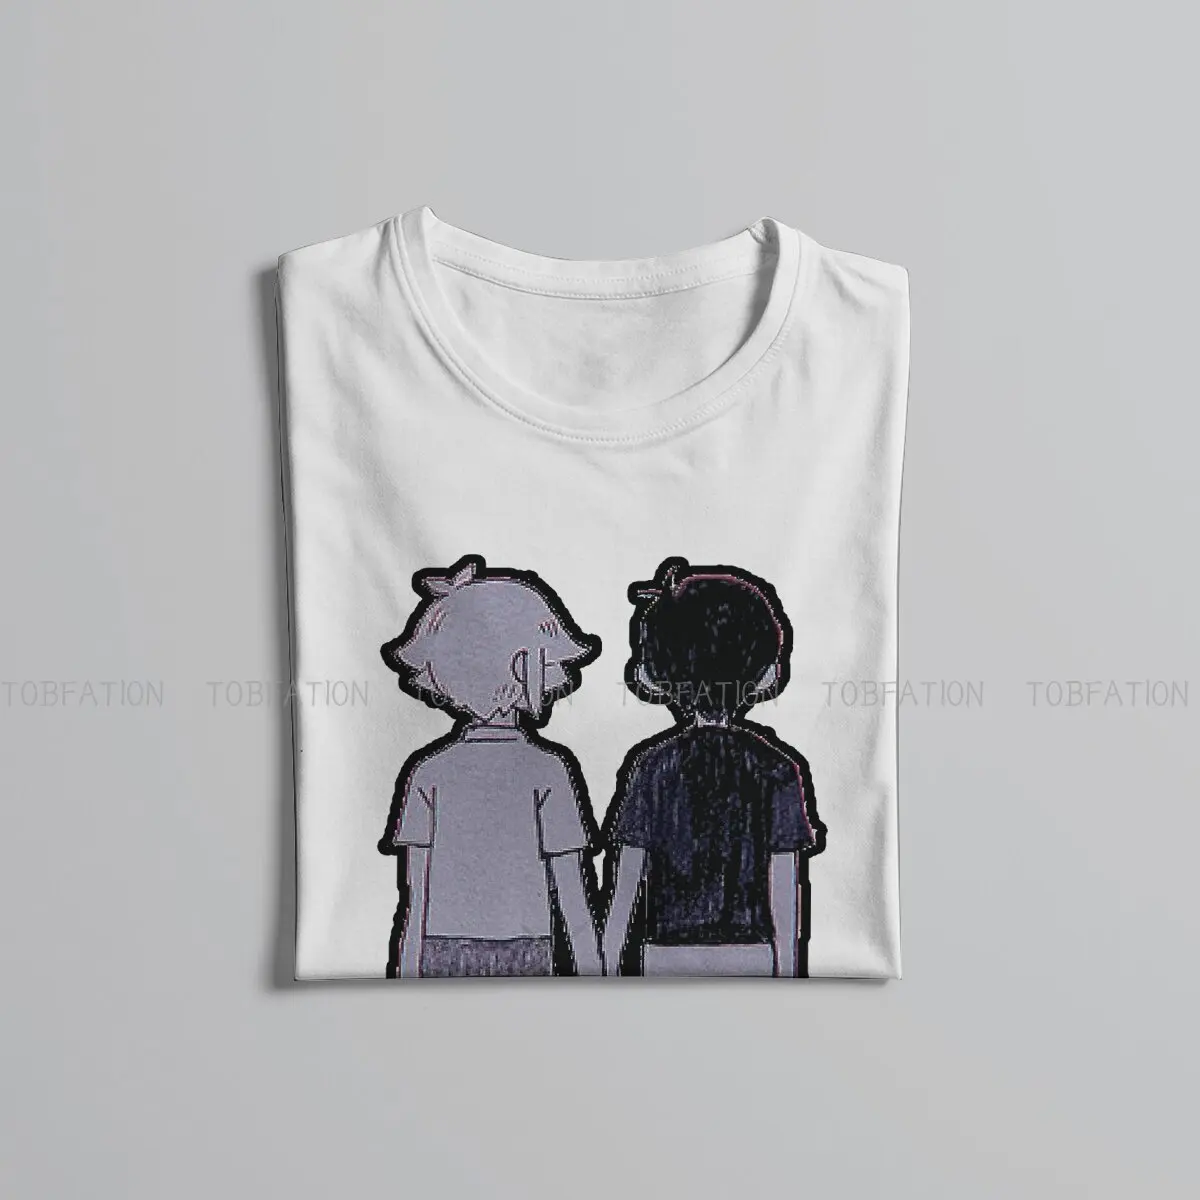 Omori Emotions Horror Game Shirt - Tailor-made T-shirts - AliExpress